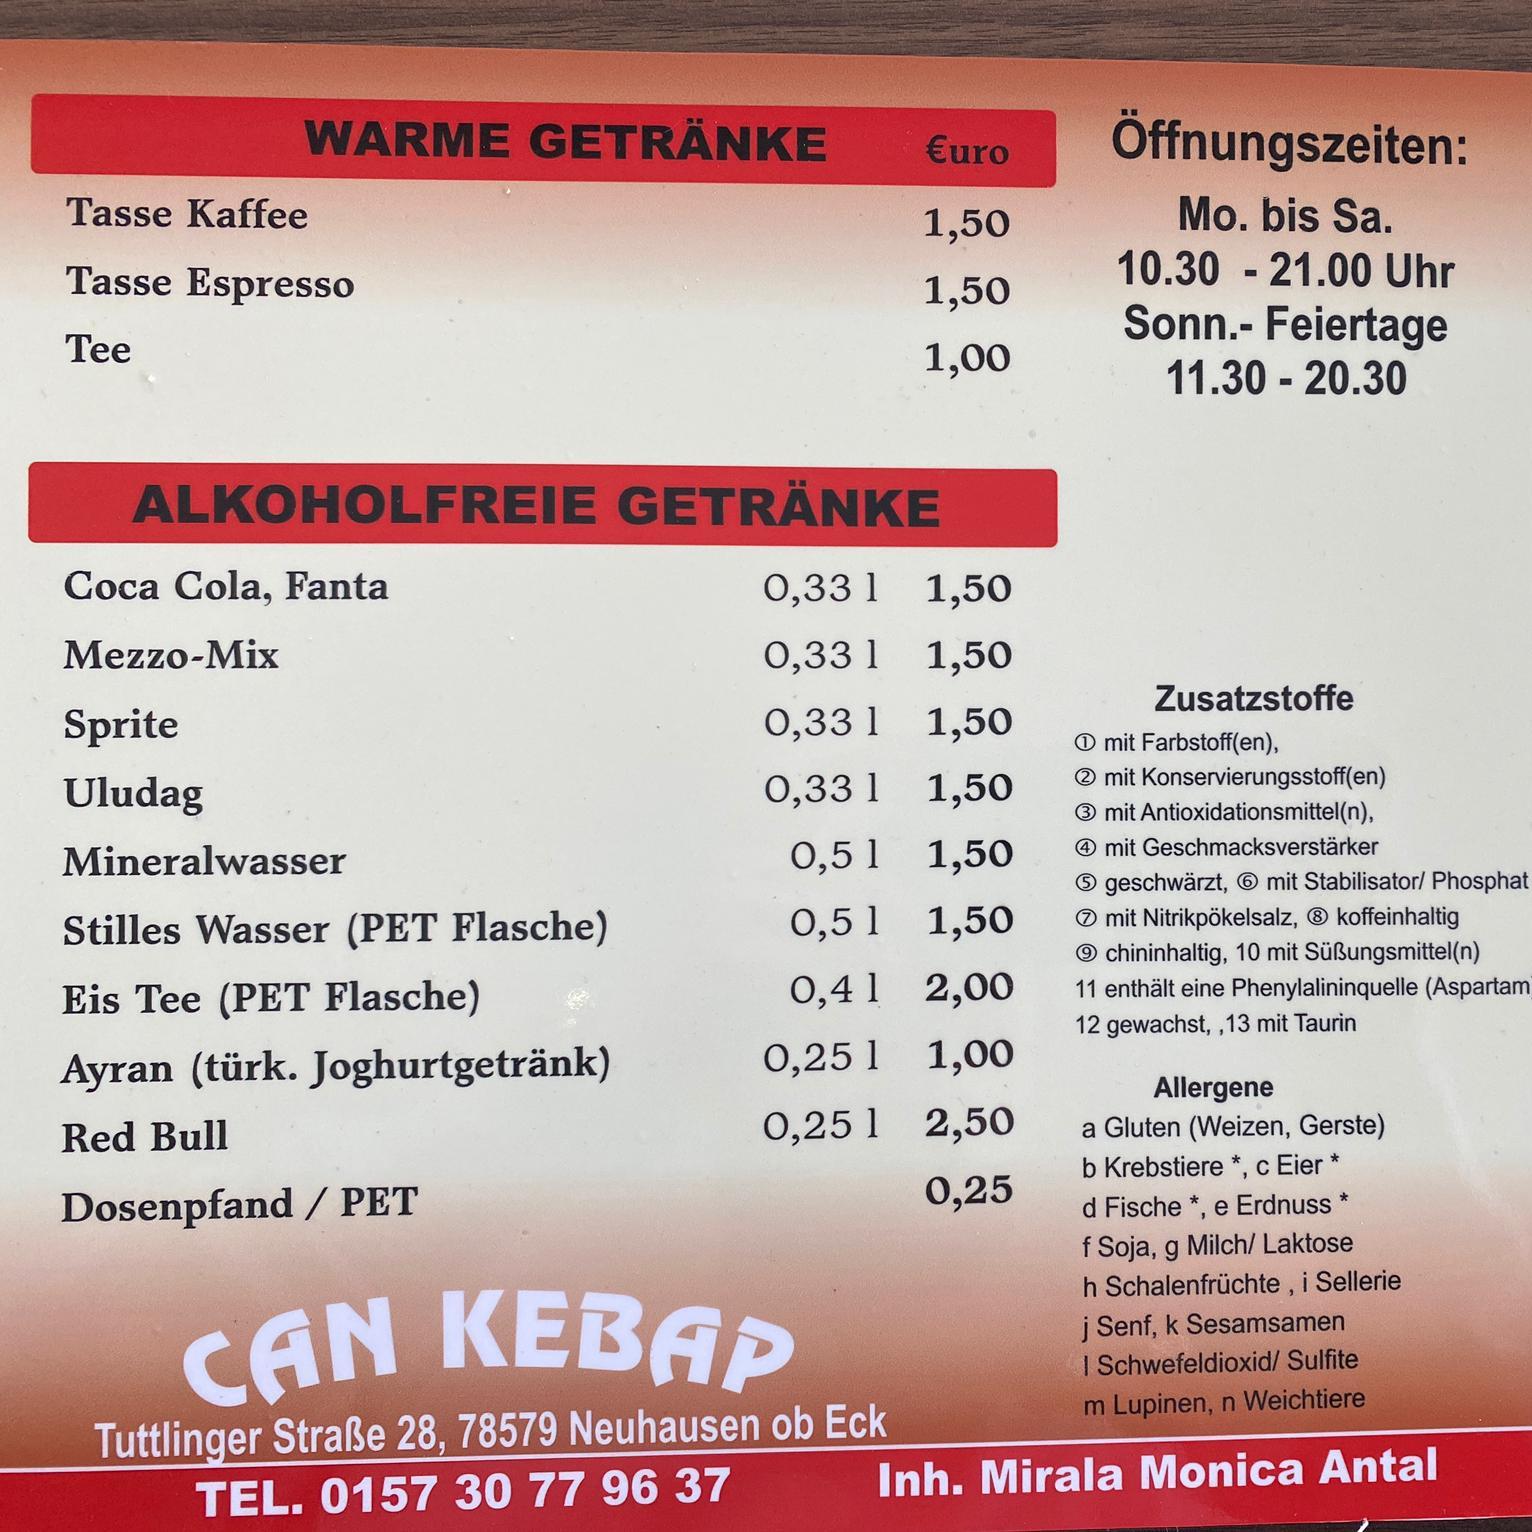 Restaurant "Can Kebap" in Neuhausen ob Eck